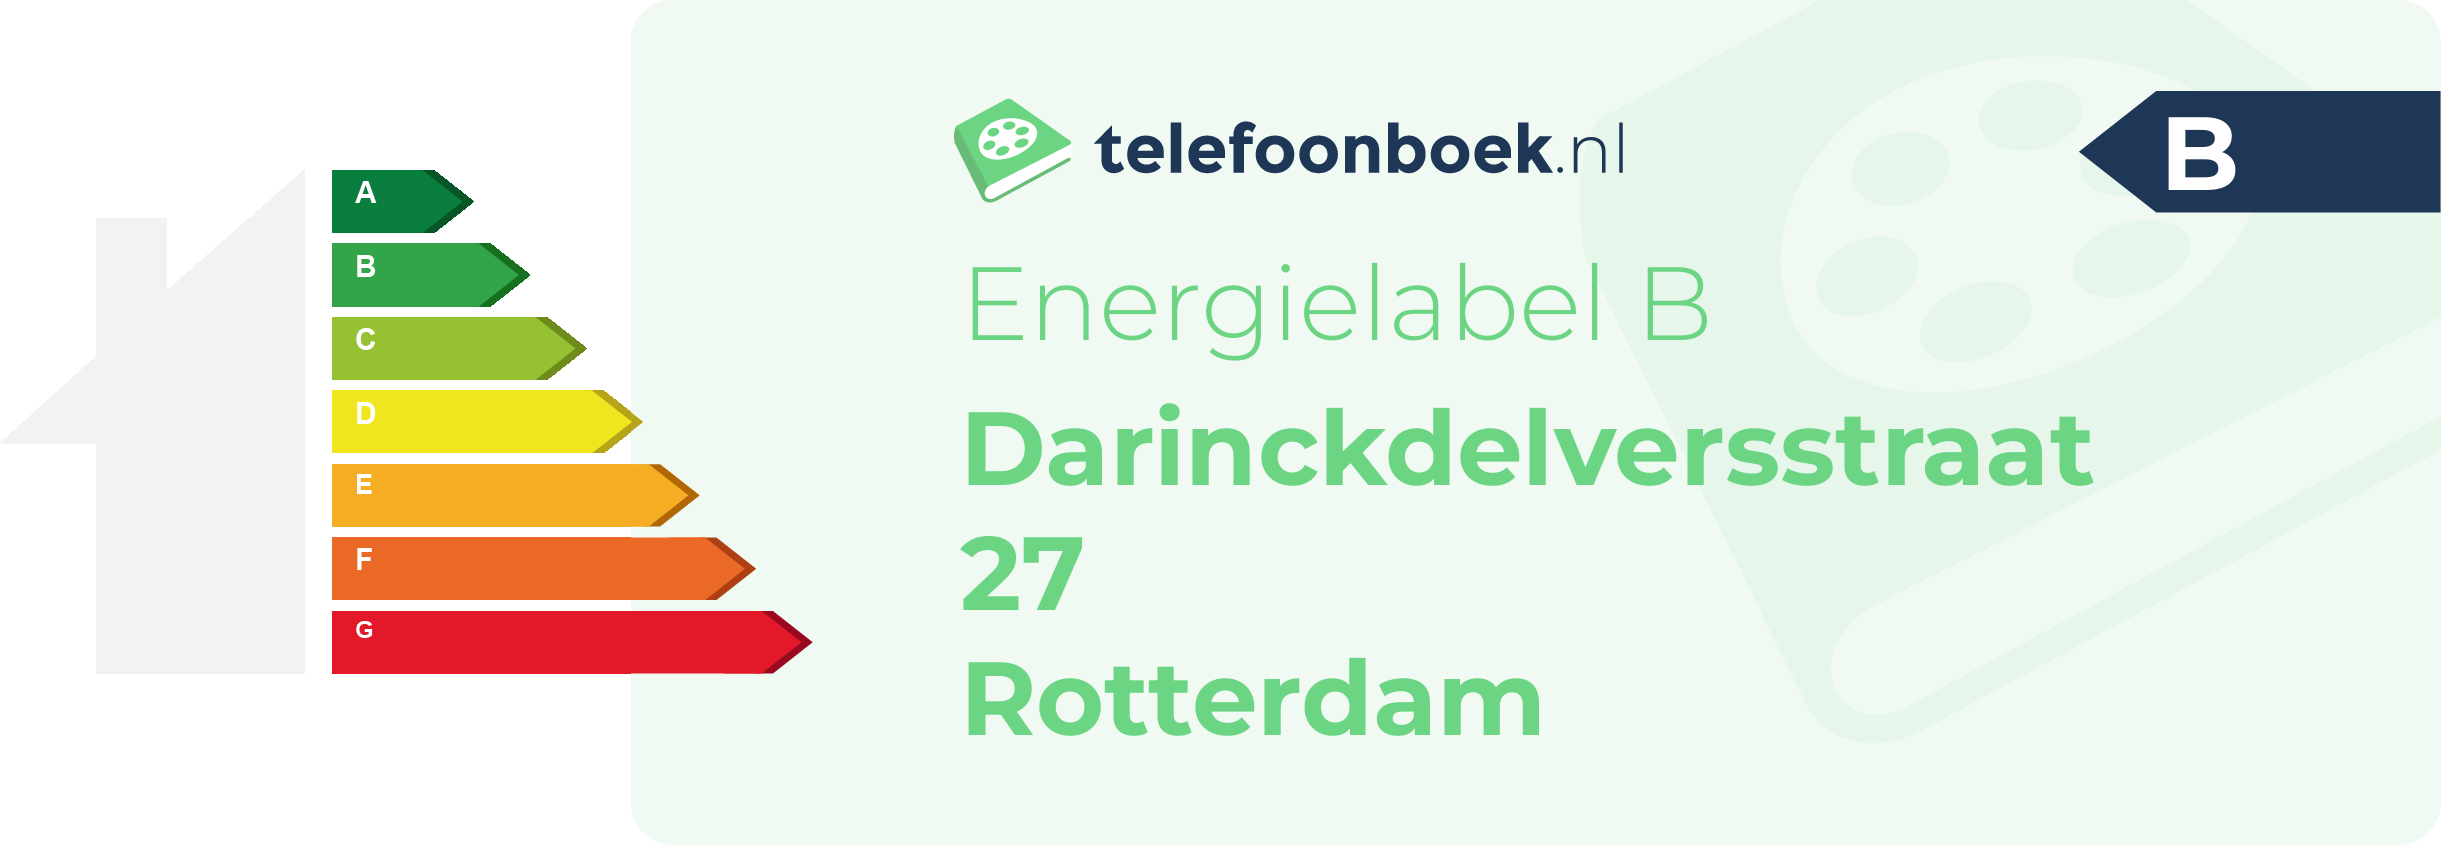 Energielabel Darinckdelversstraat 27 Rotterdam